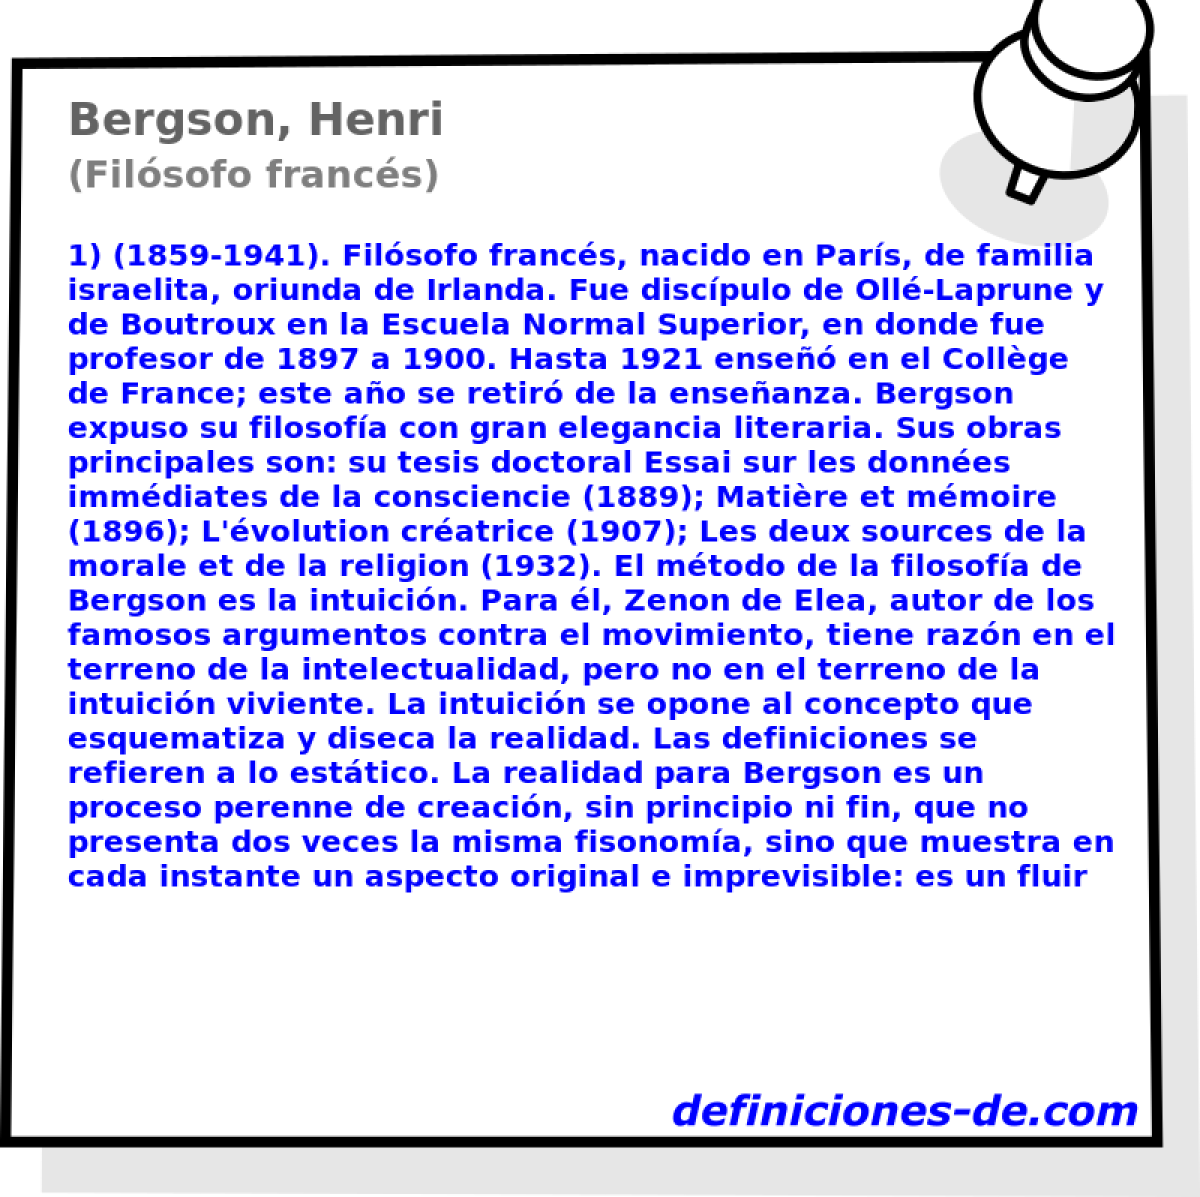 Bergson, Henri (Filsofo francs)